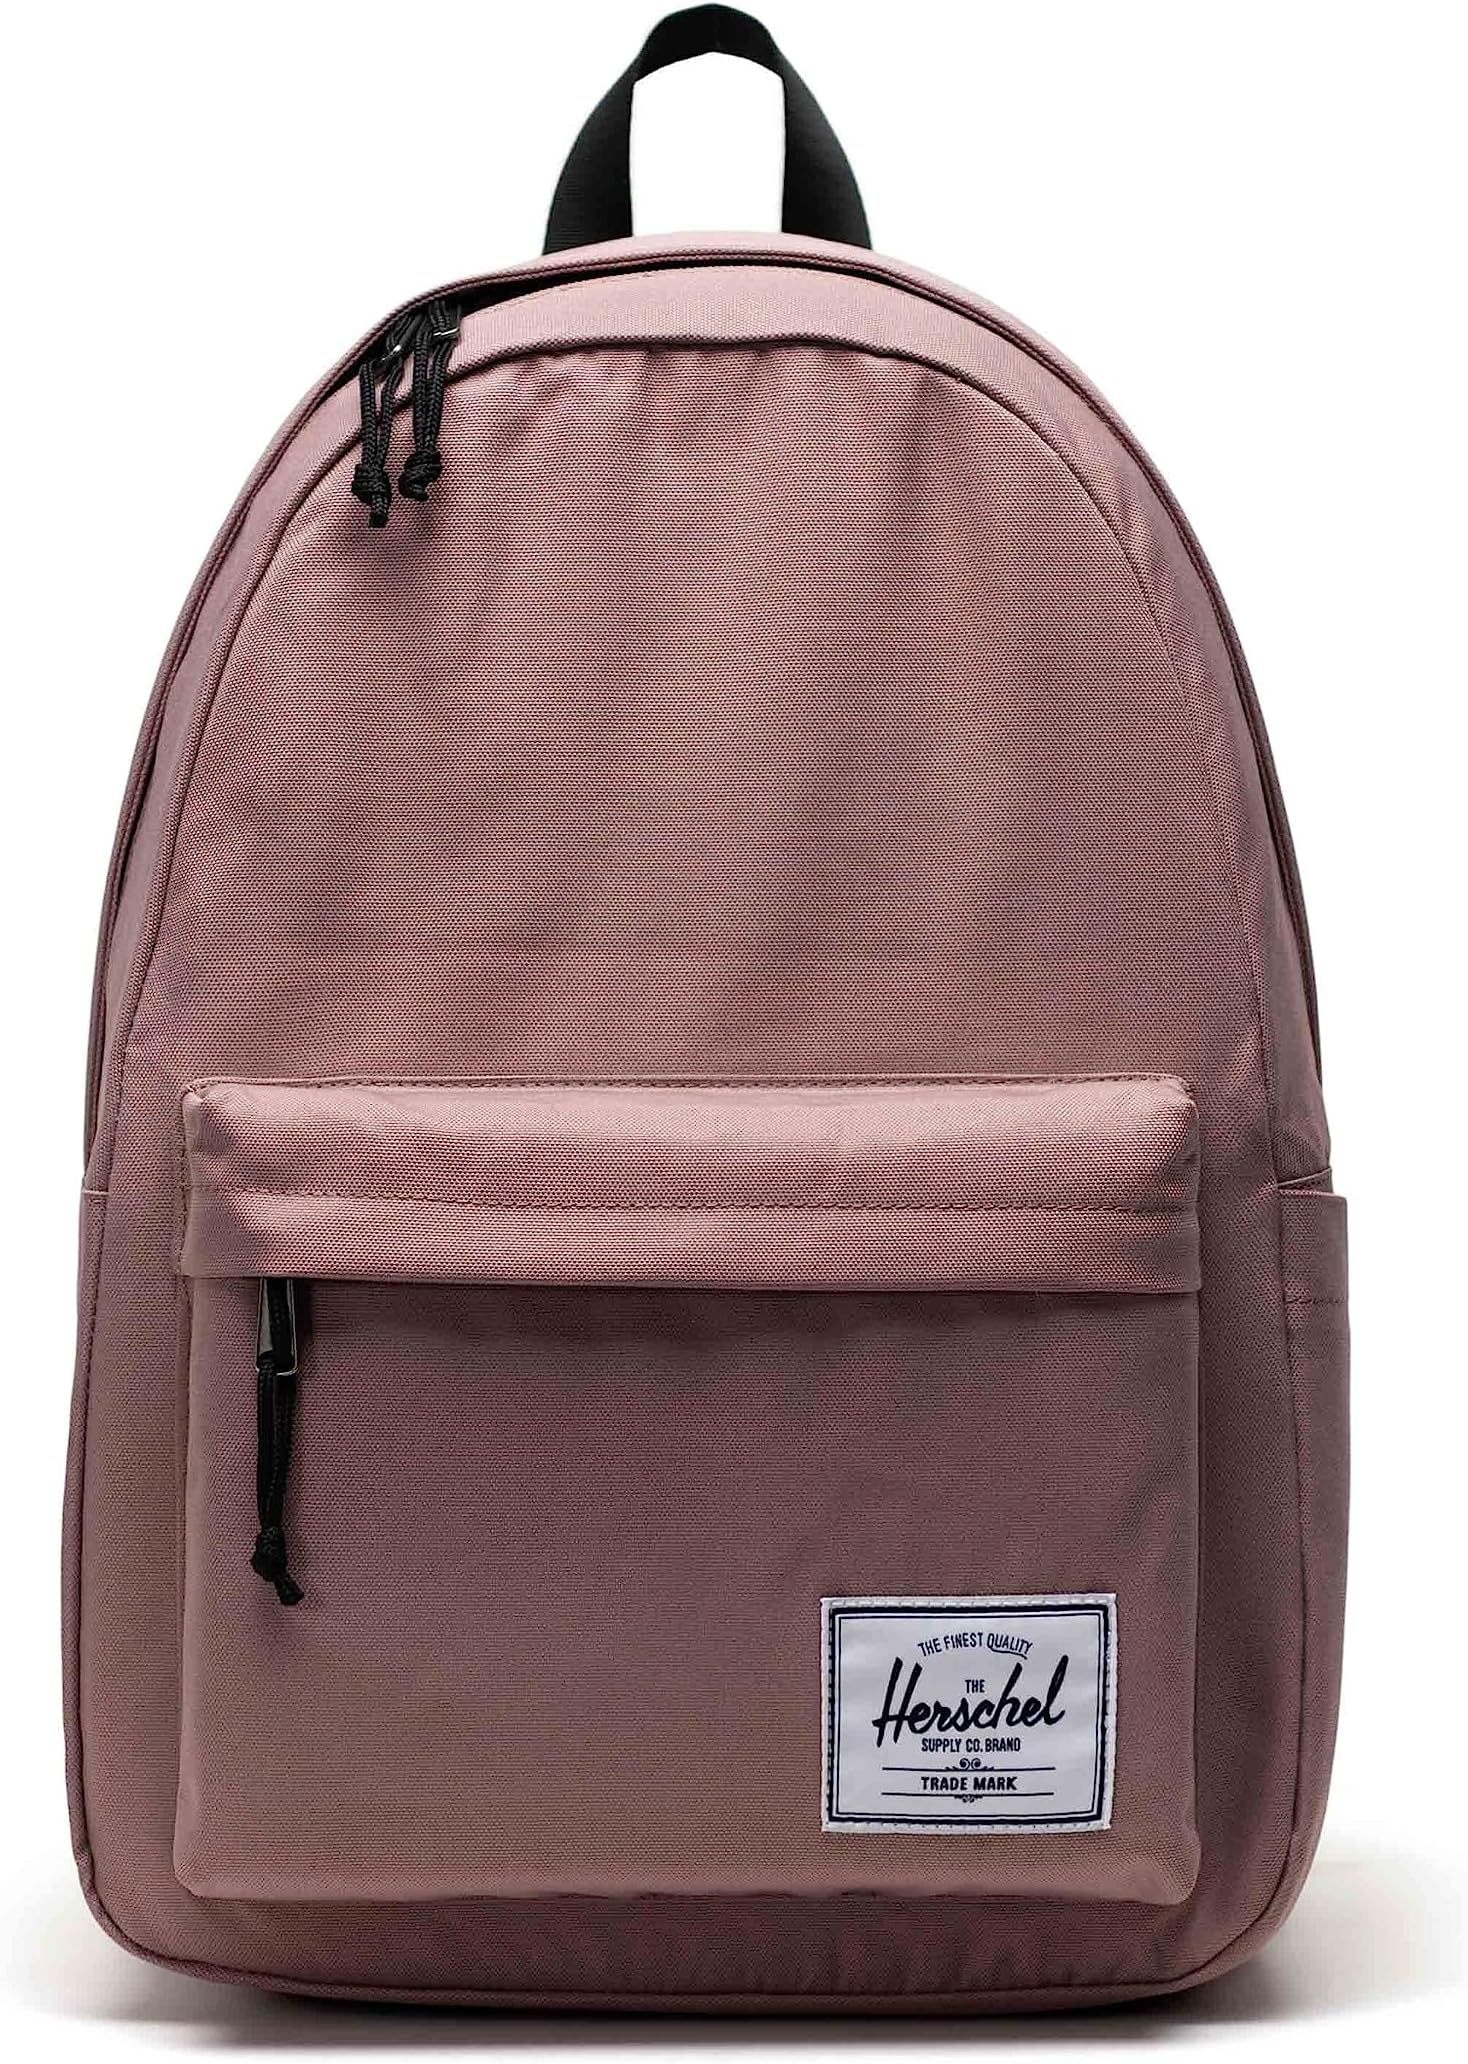 сумка heritage crossbody herschel supply co цвет ash rose Рюкзак Classic XL Backpack Herschel Supply Co., цвет Ash Rose